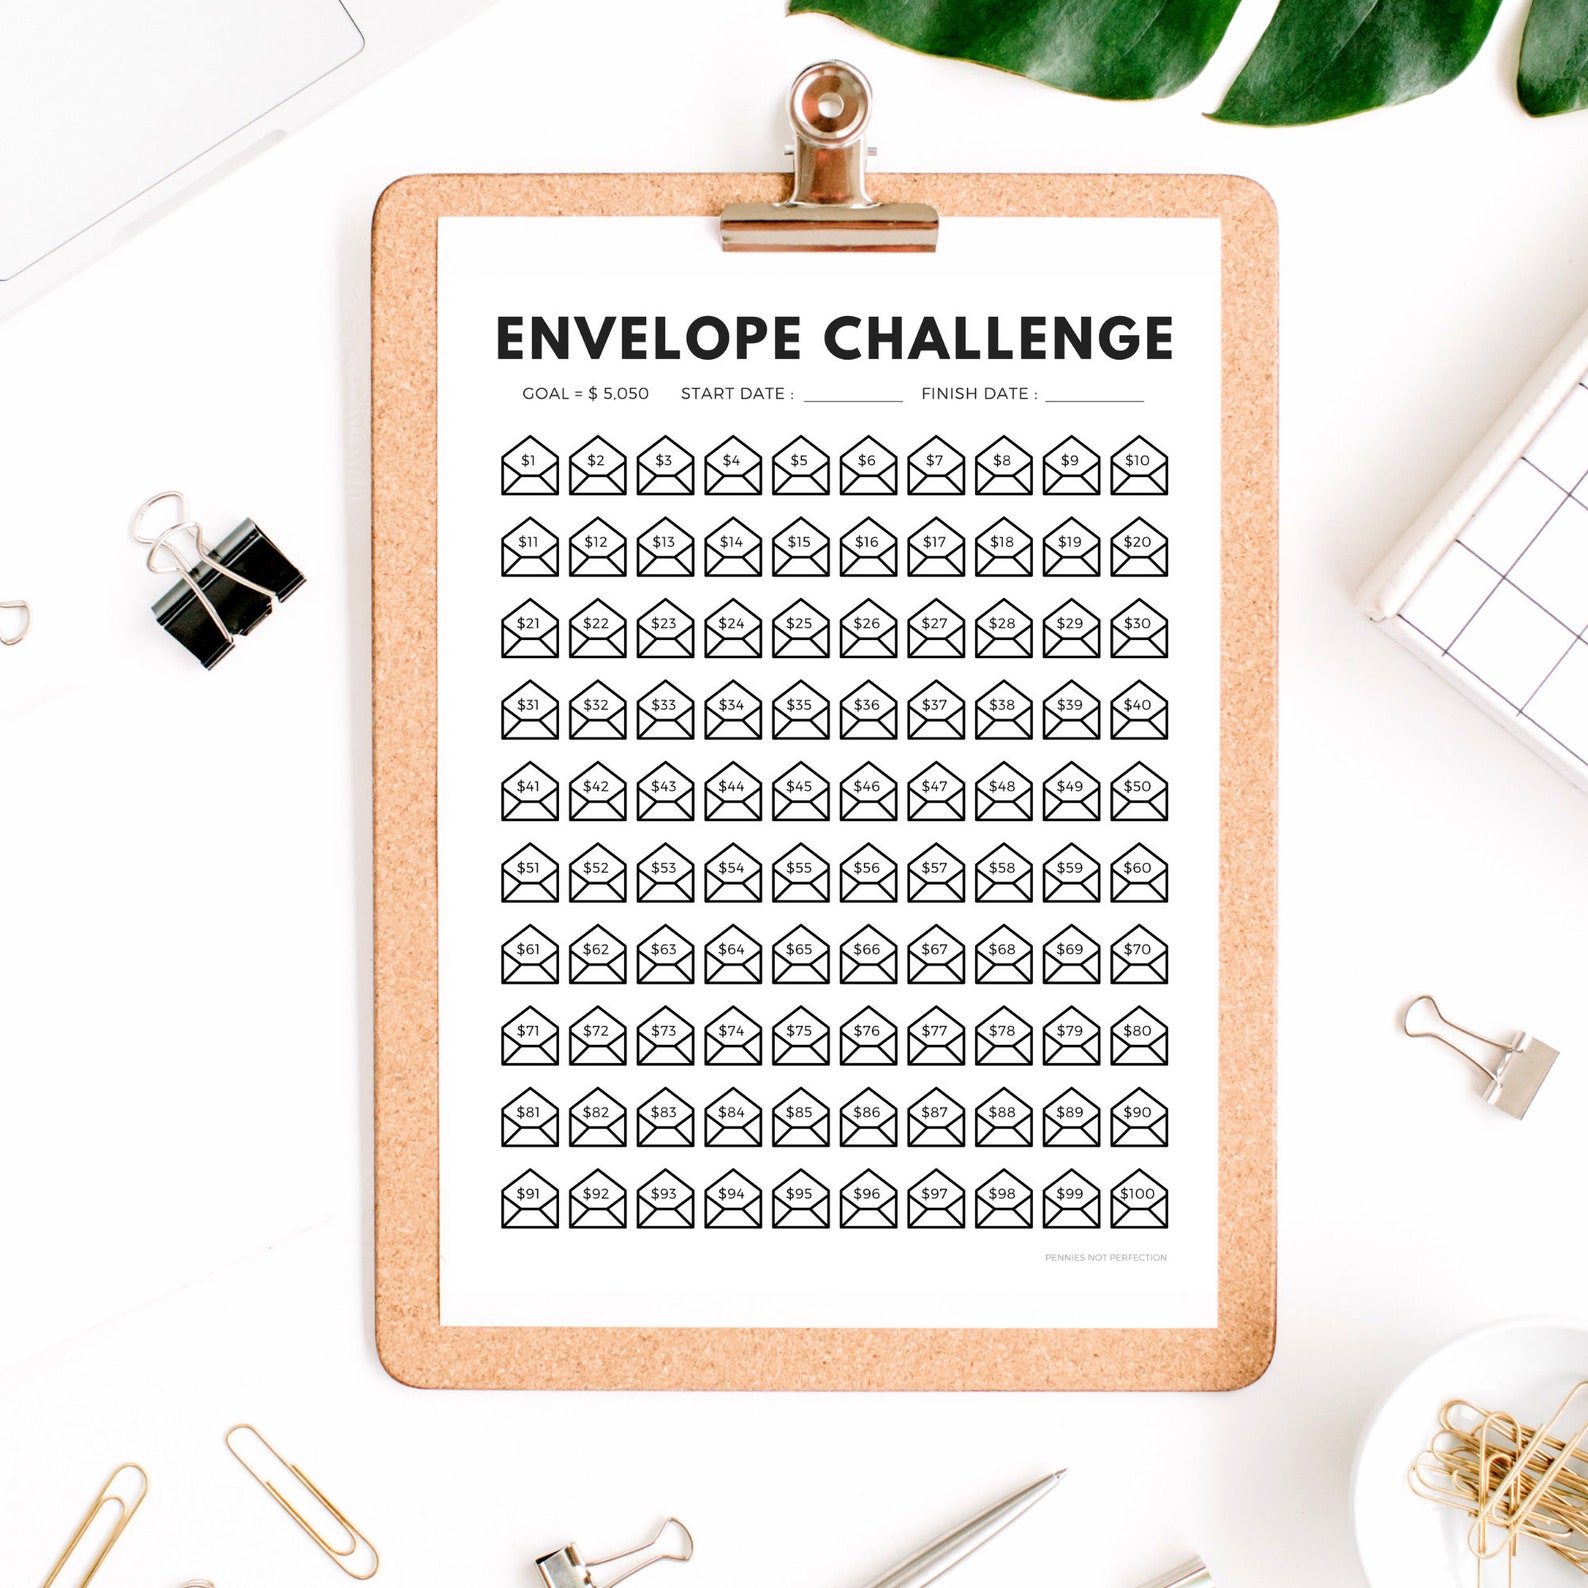 100-envelope-challenge-printable